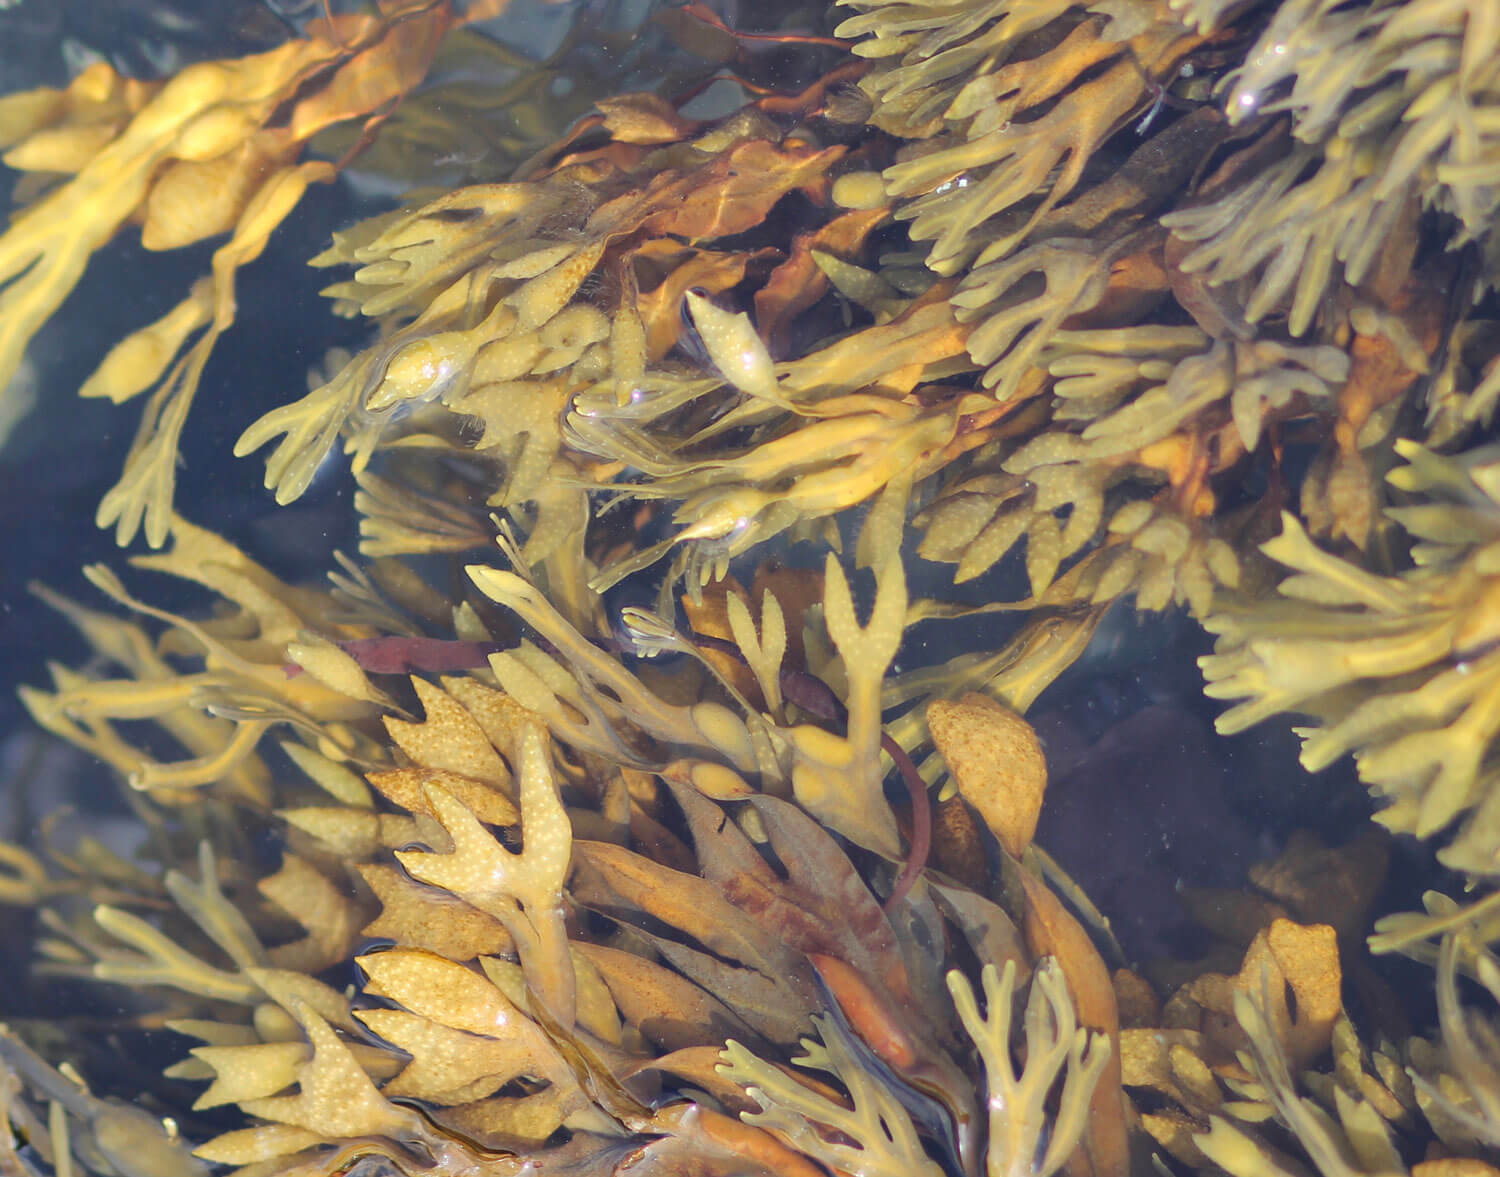 Atlantic kelp seaweed benefits scalp and hair